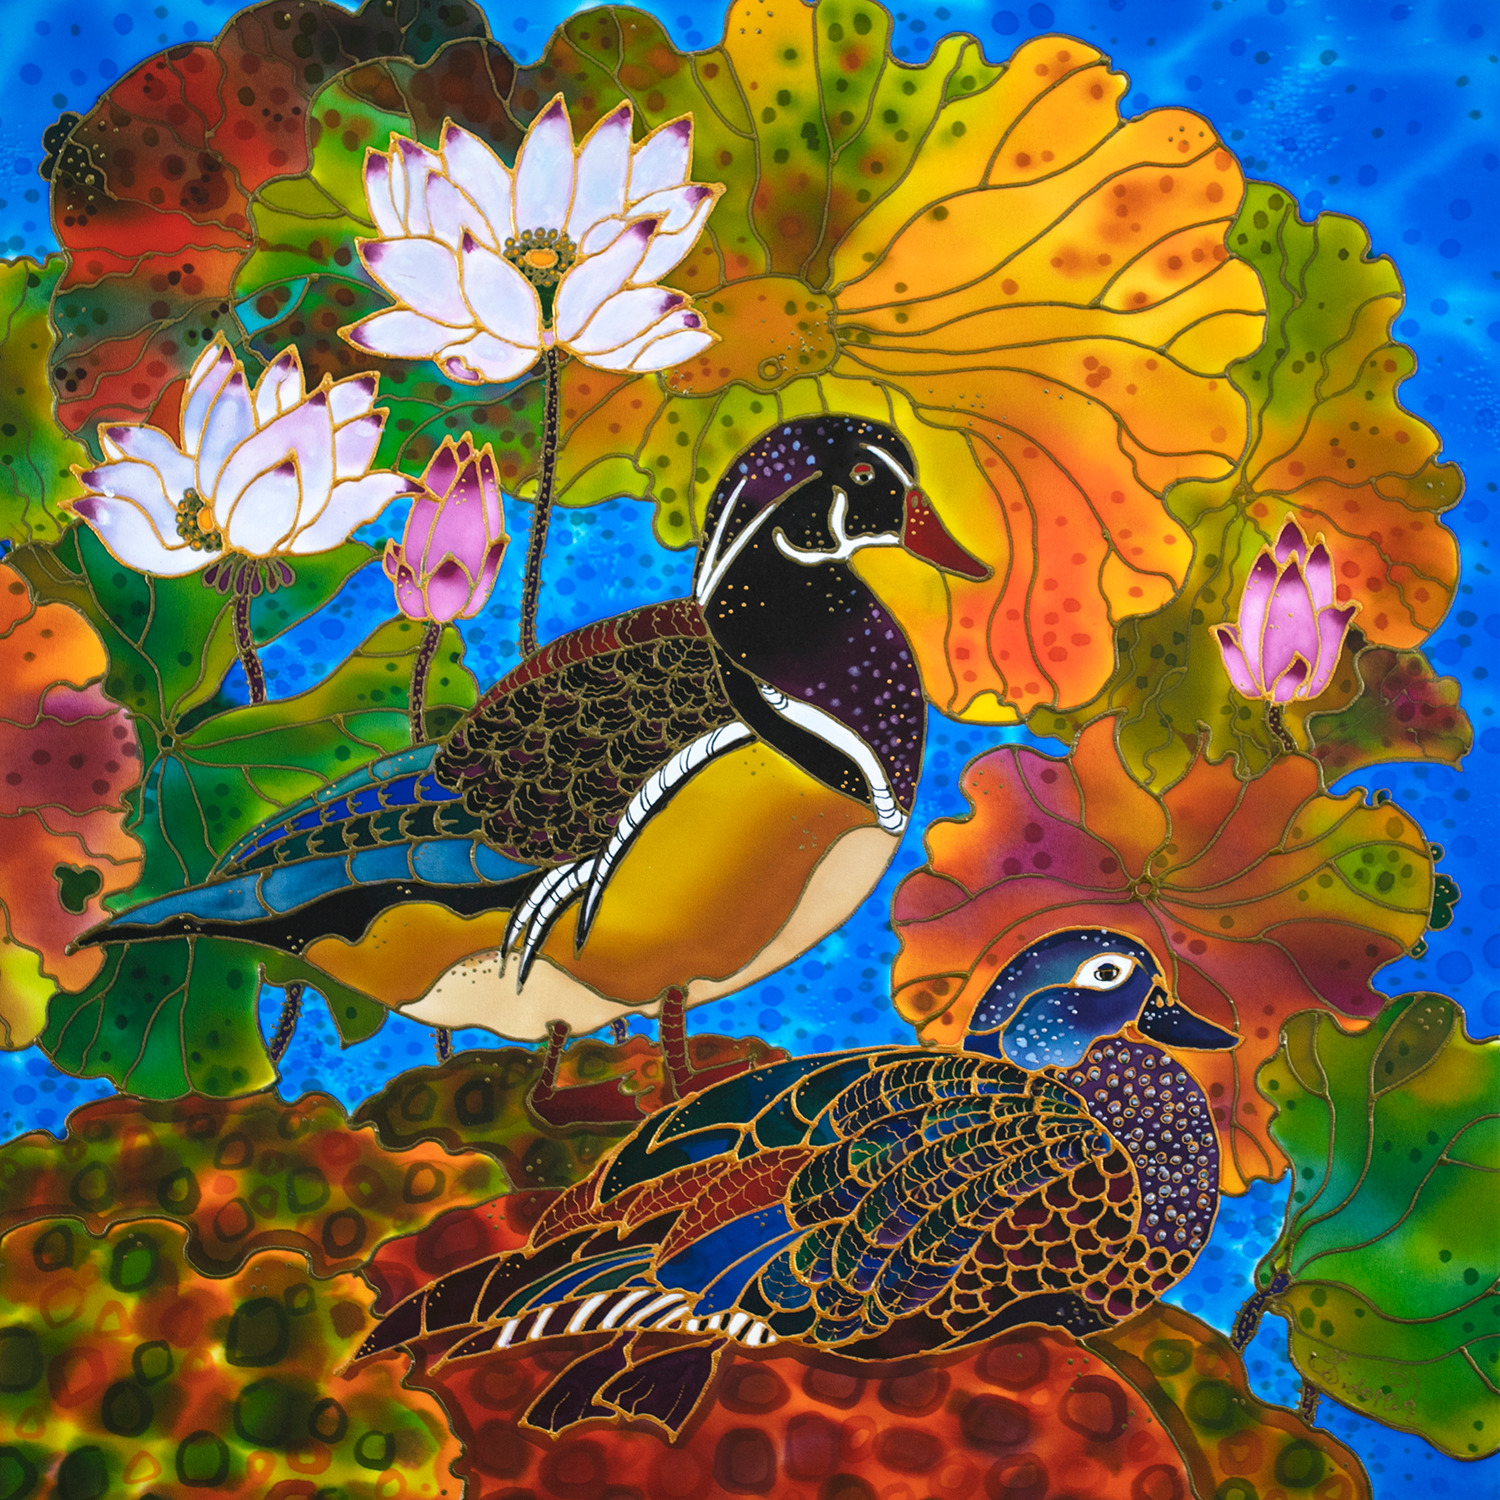 Colorful ducks hulnwi